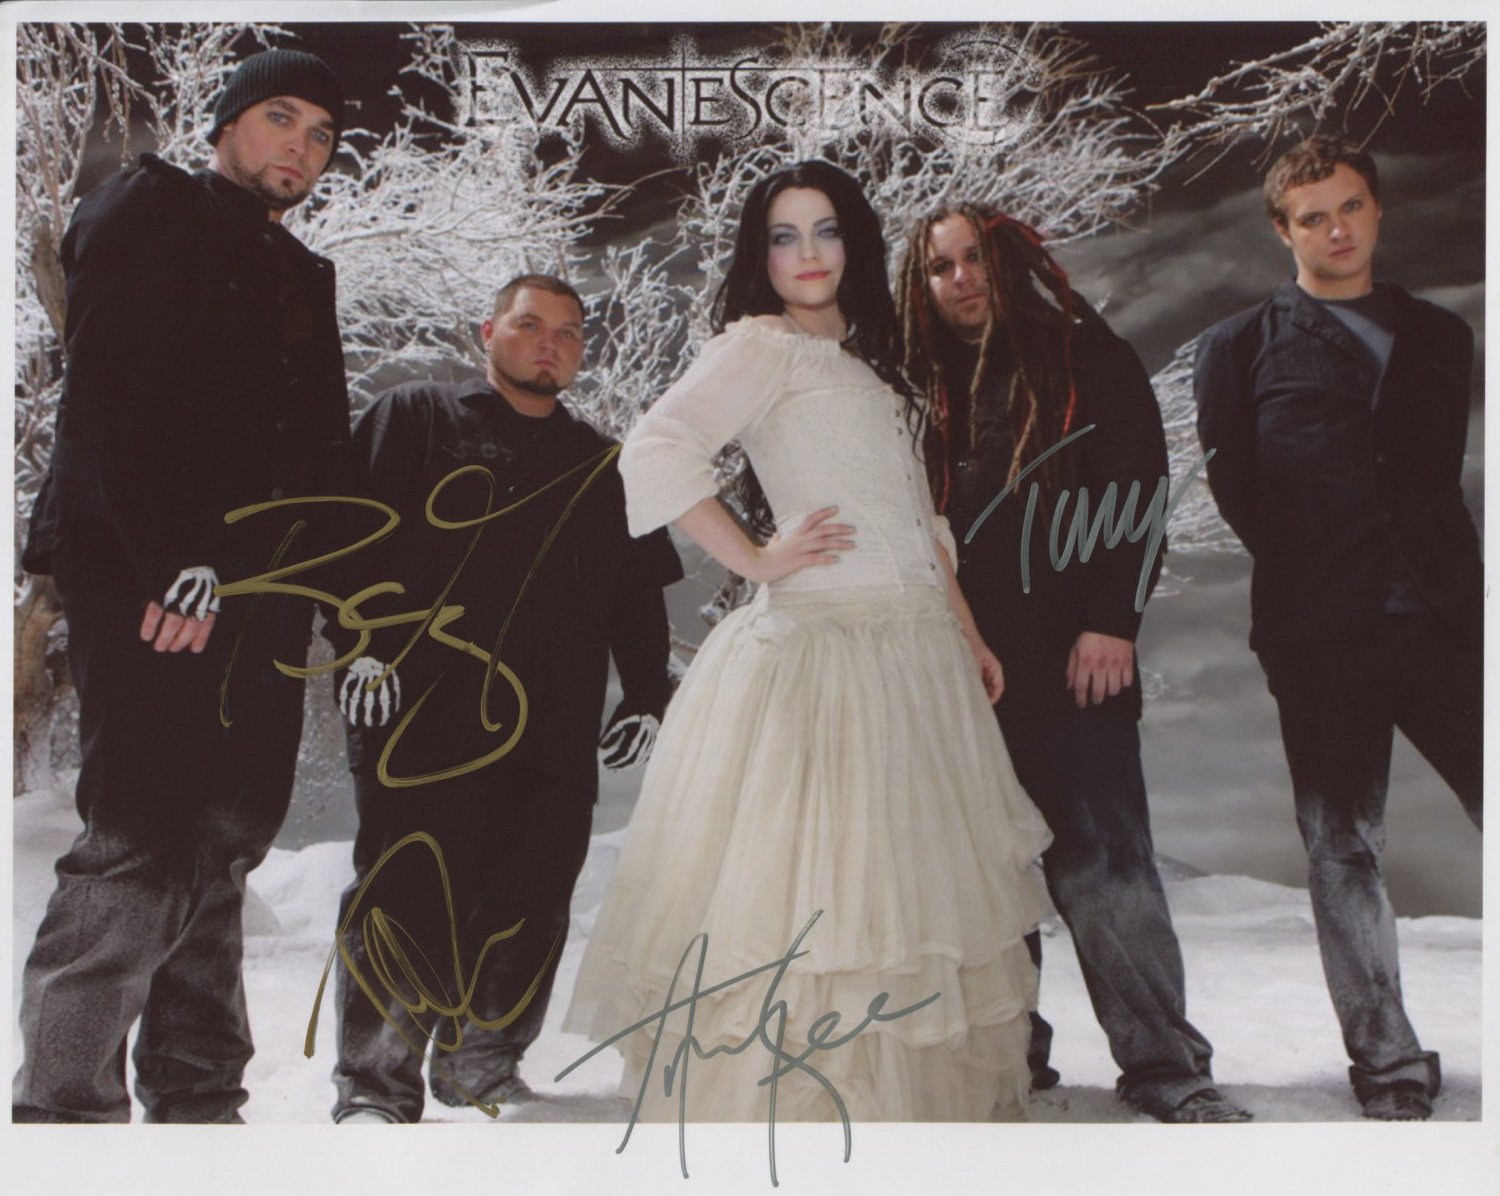 Evanescence SIGNED Photo 1st Generation PRINT Ltd 150 + Certificate (1)